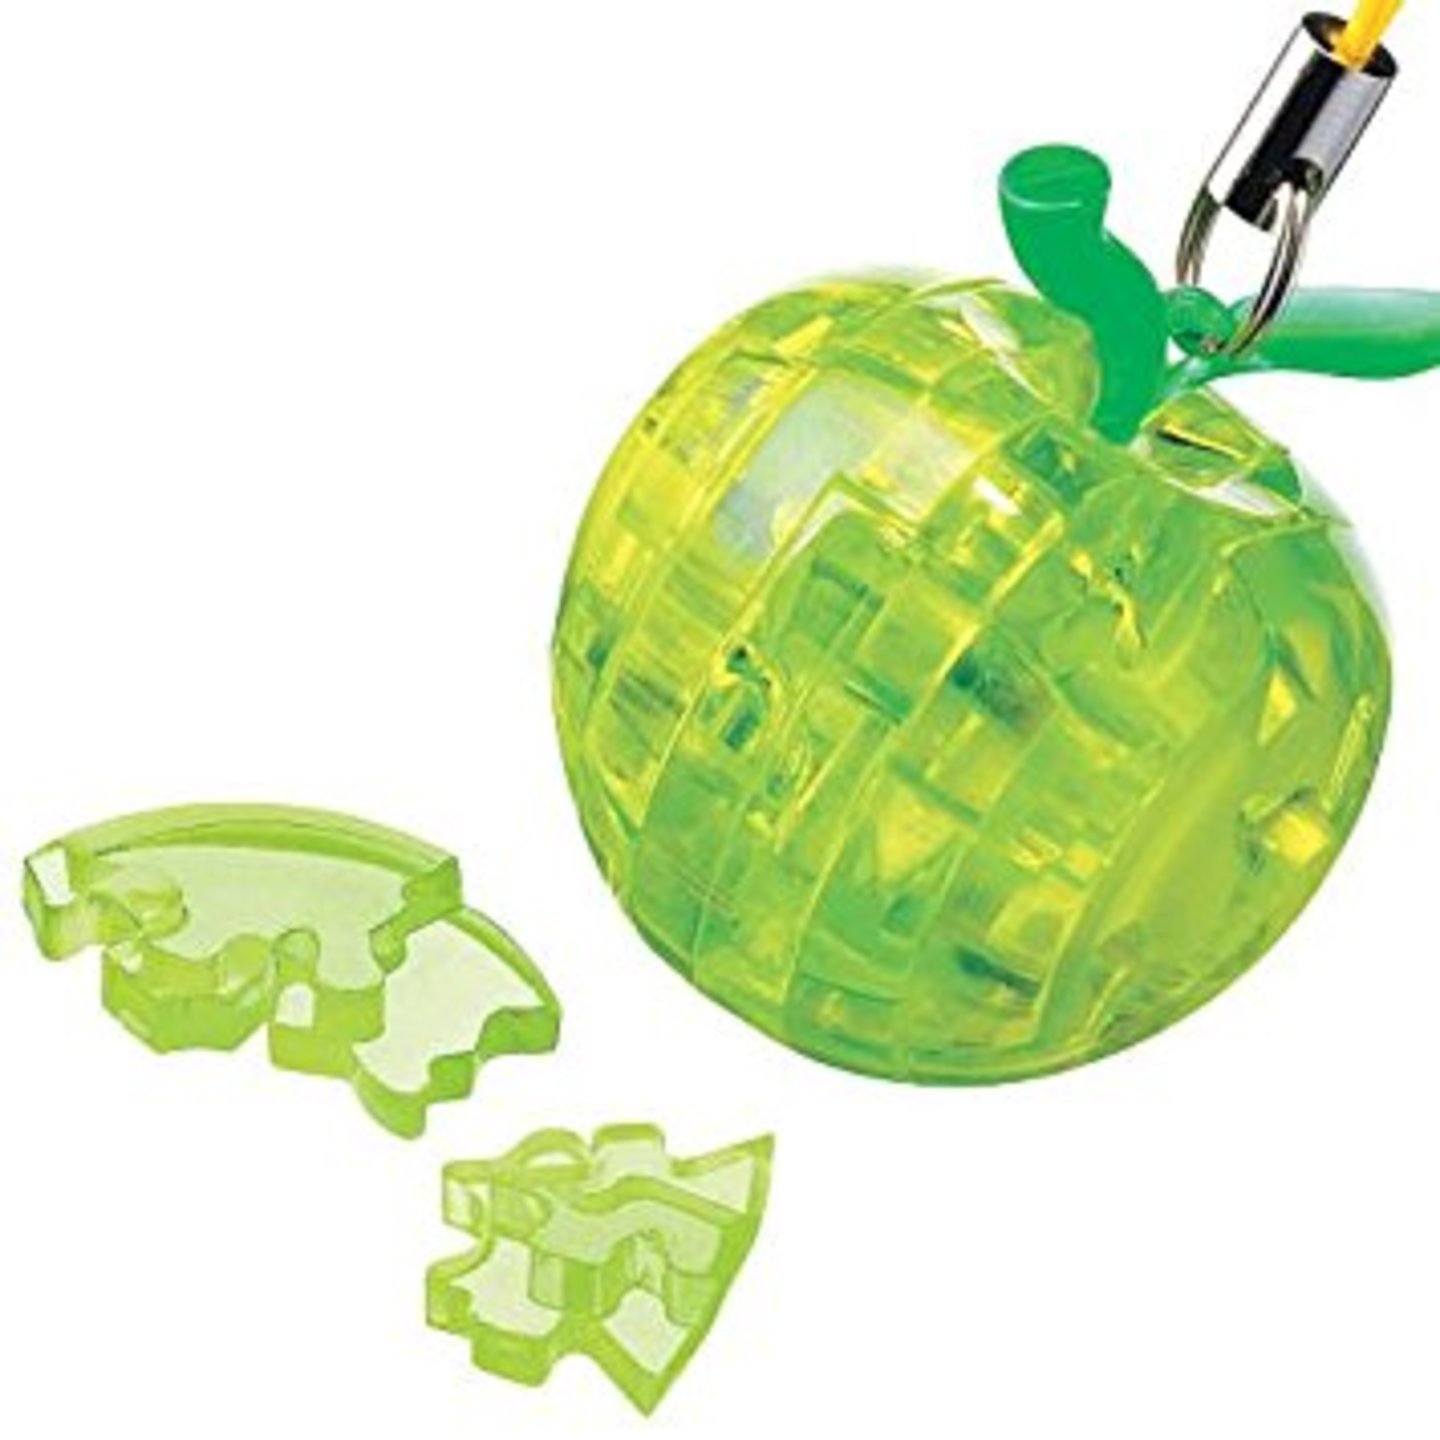 3D Crystal Puzzle Mini Green Apple